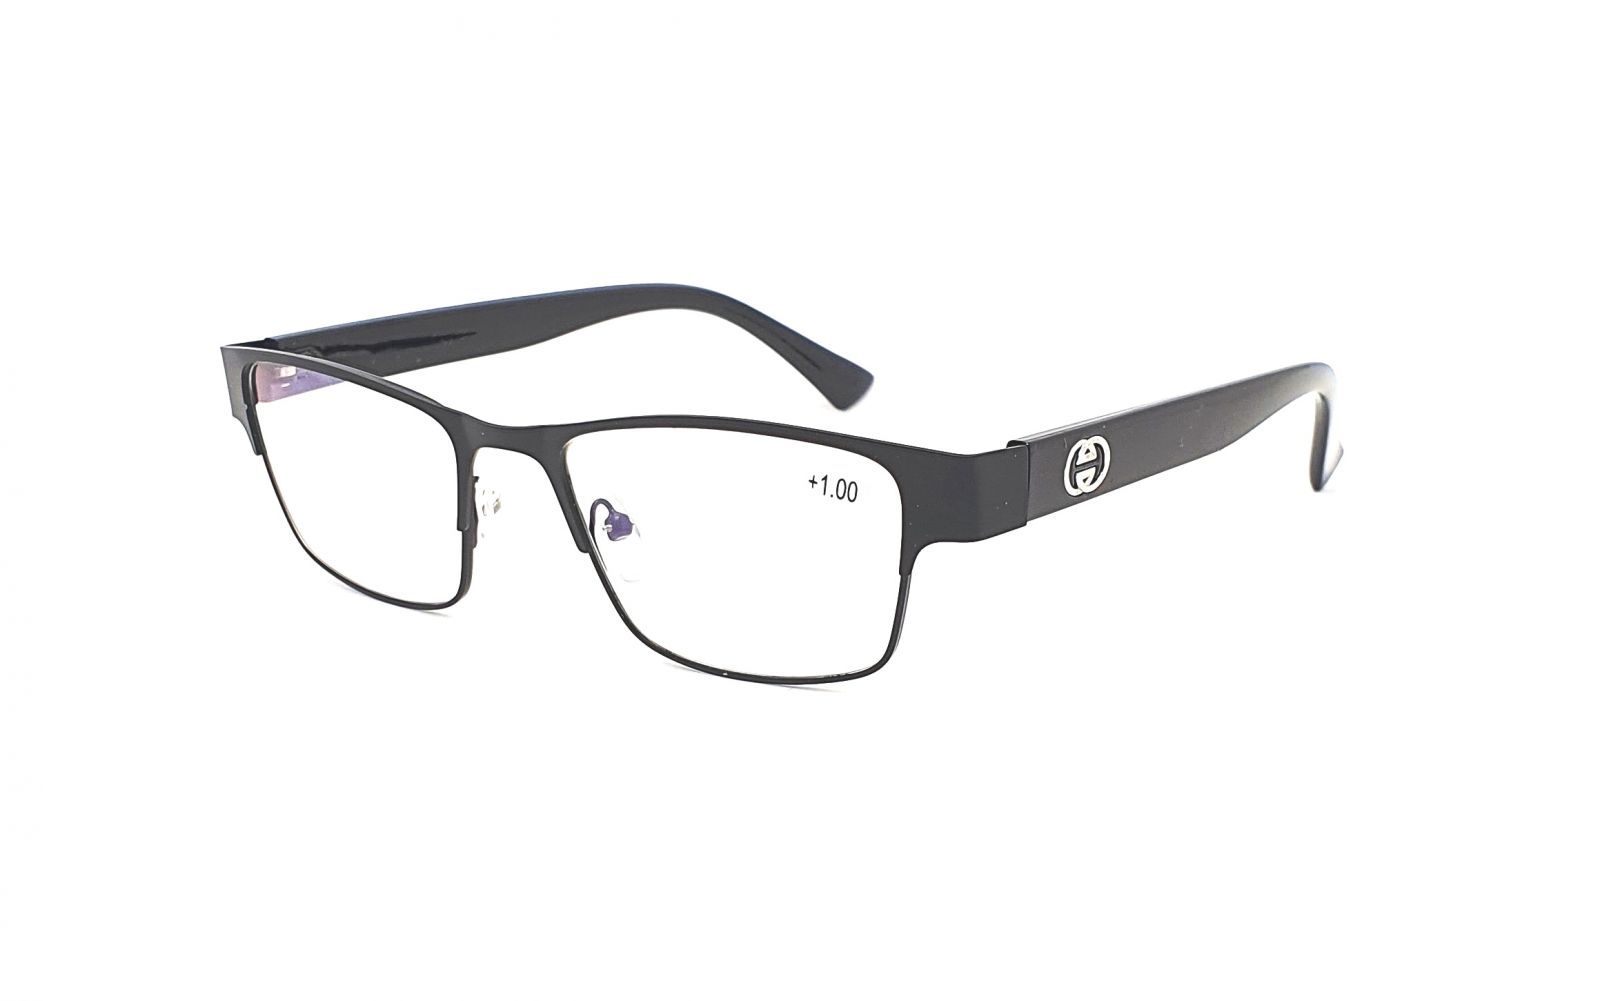 Dioptrické brýle OK231 +1,00 black s antireflexní vrstvou